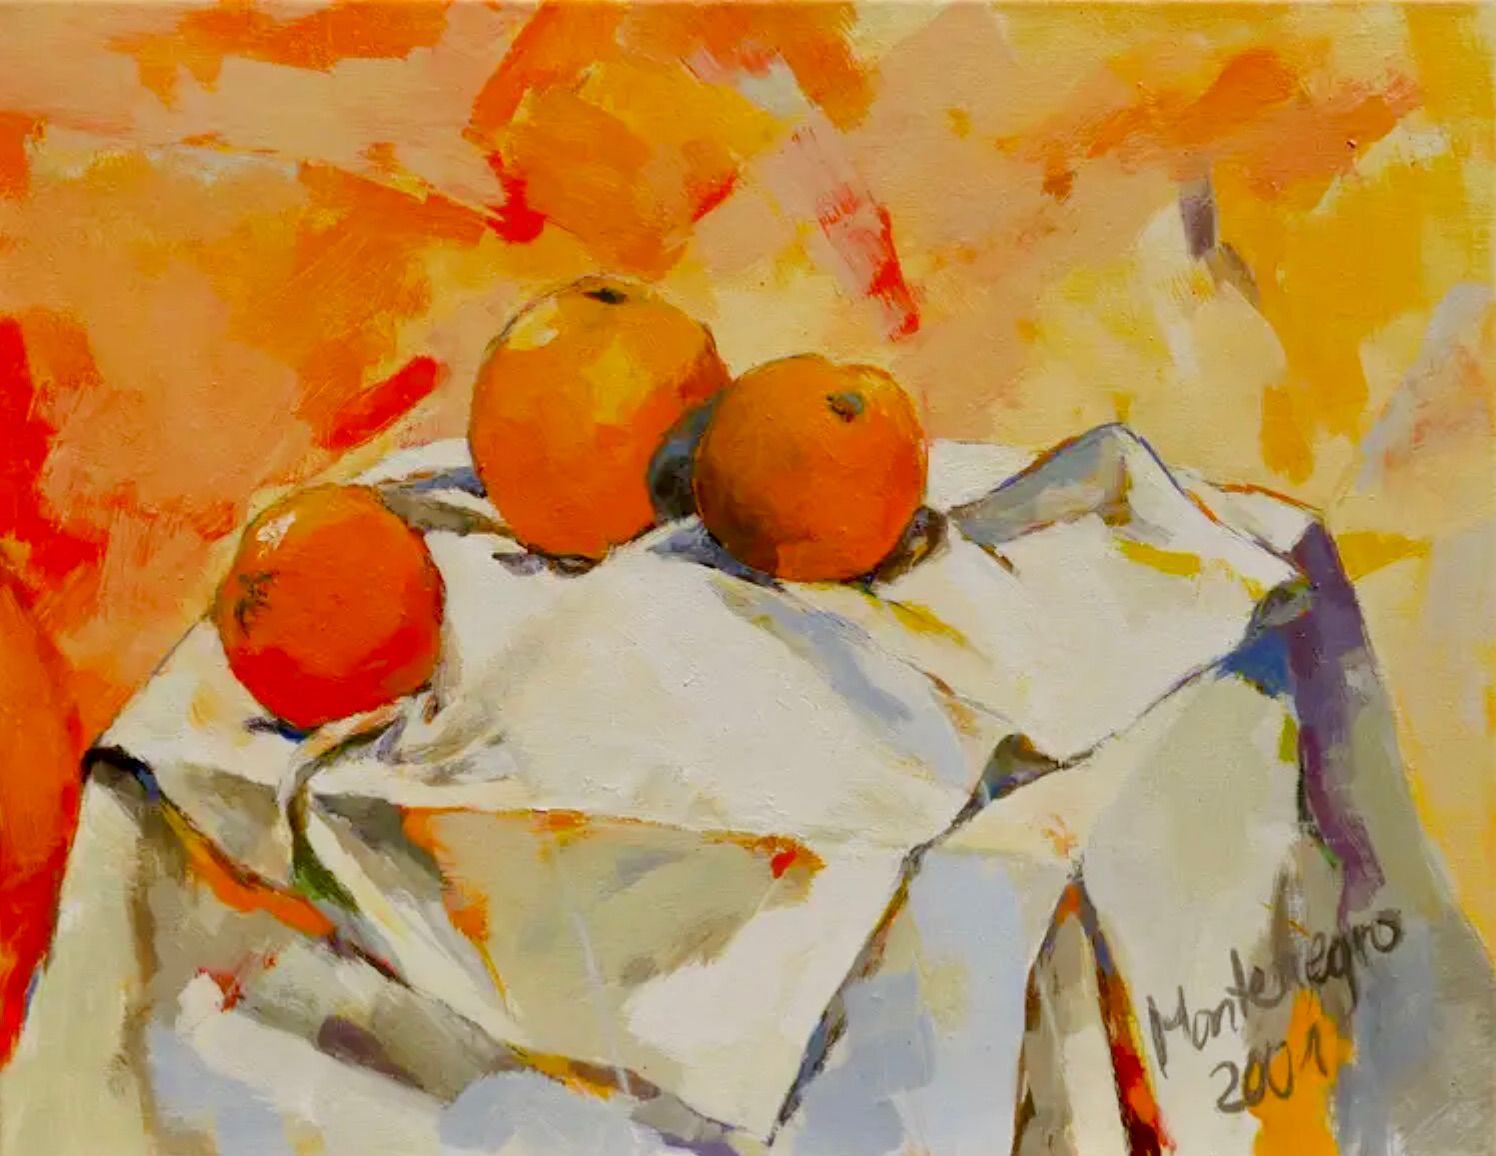 Miriam Montenegro peinture expressionniste orange sur toile blanche